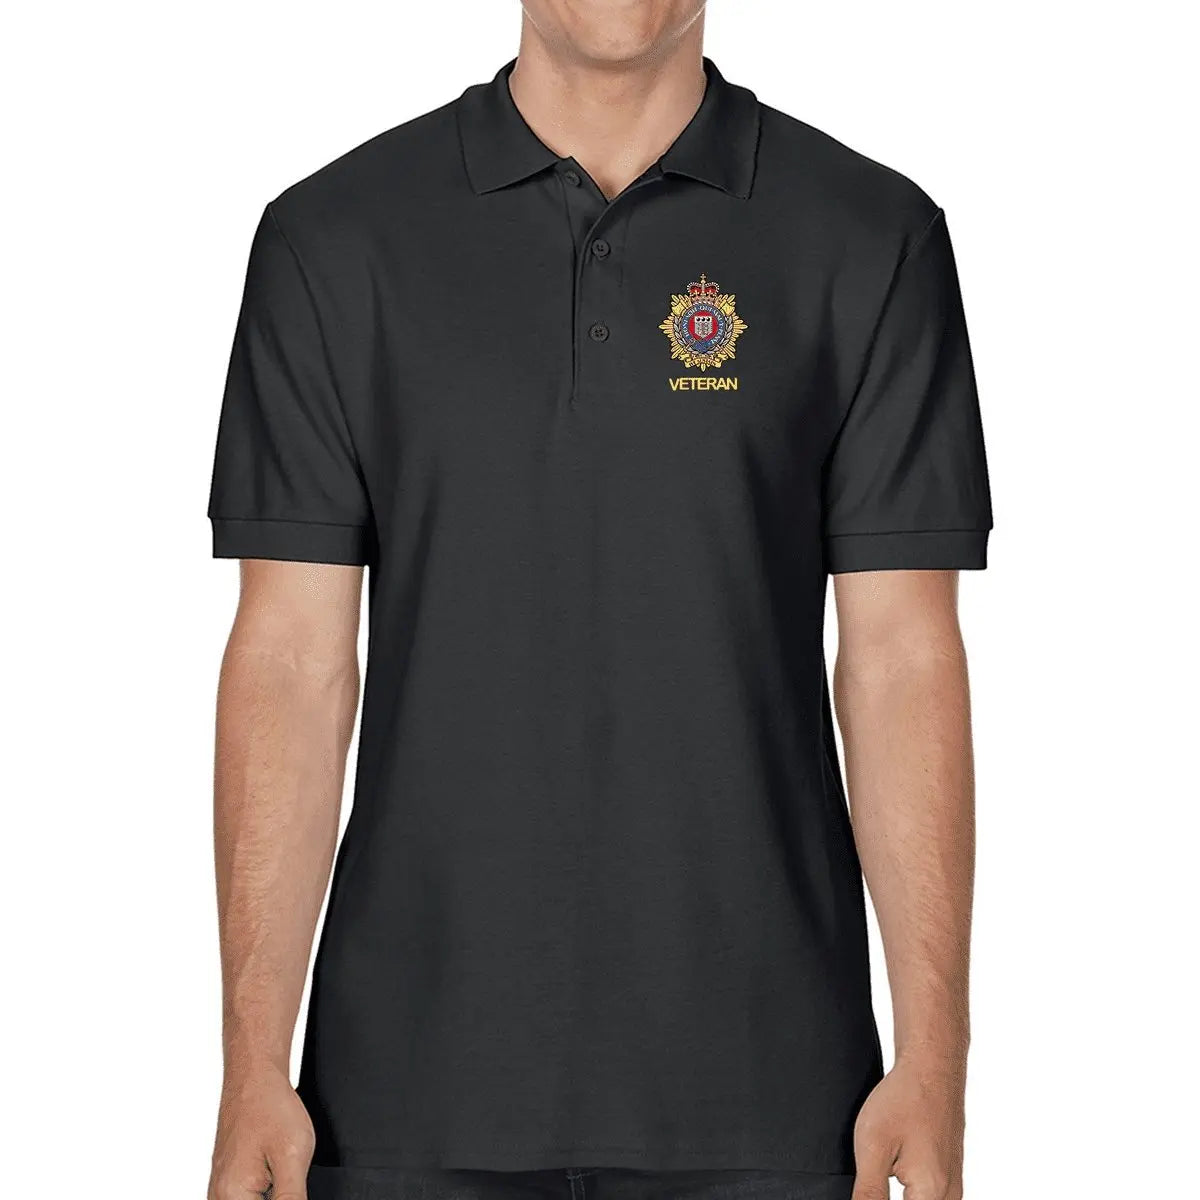 Royal Logistics Corps Veteran Polo Shirt redplume